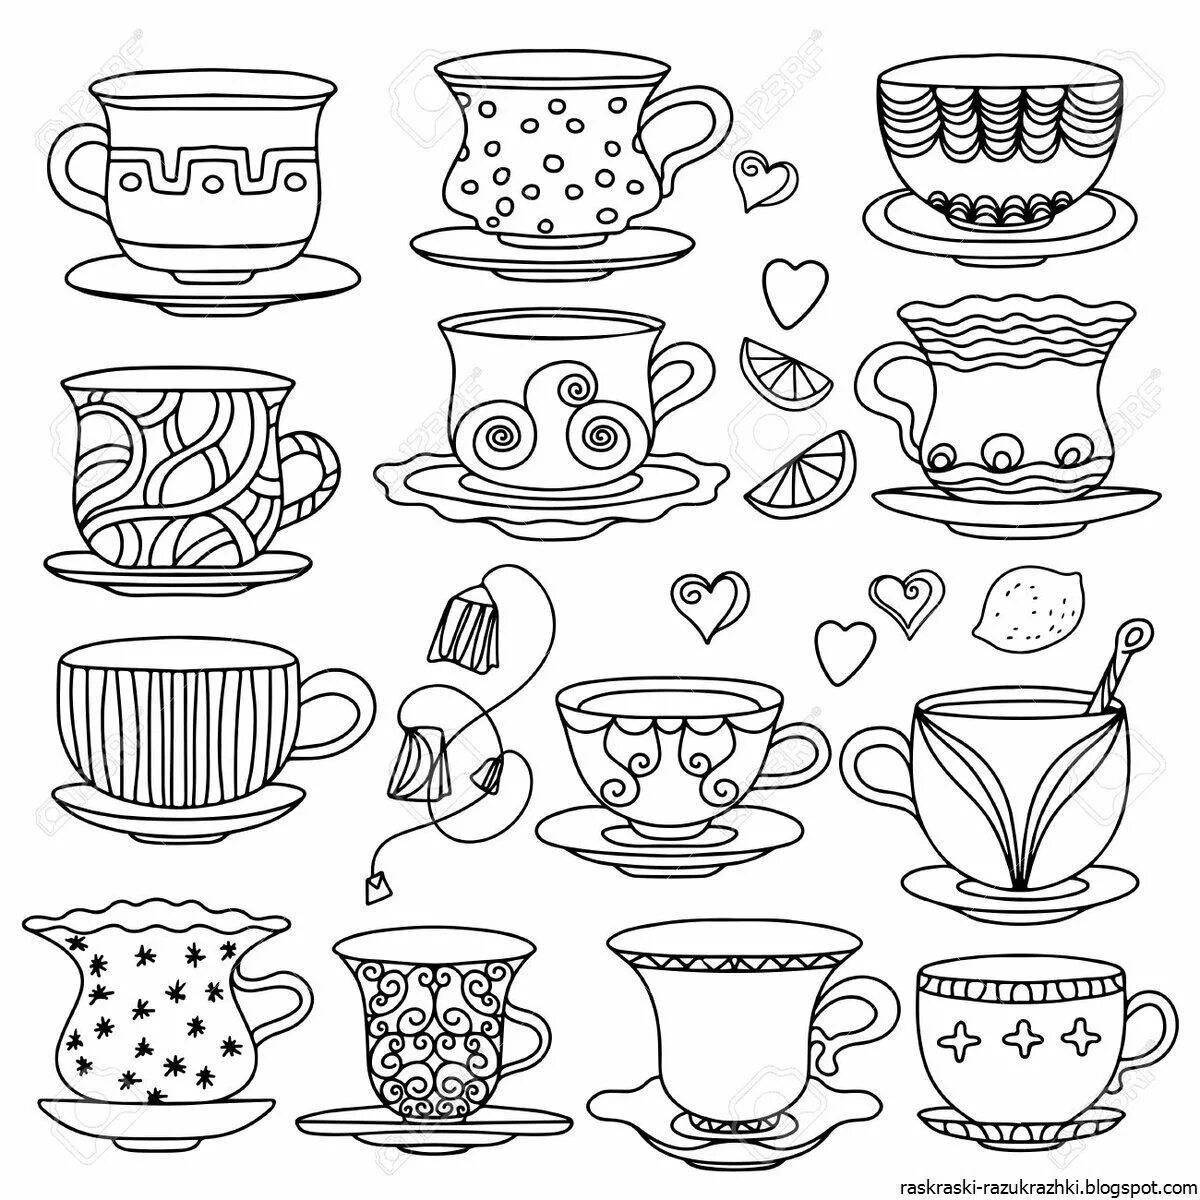 Playful teaware coloring book for babies